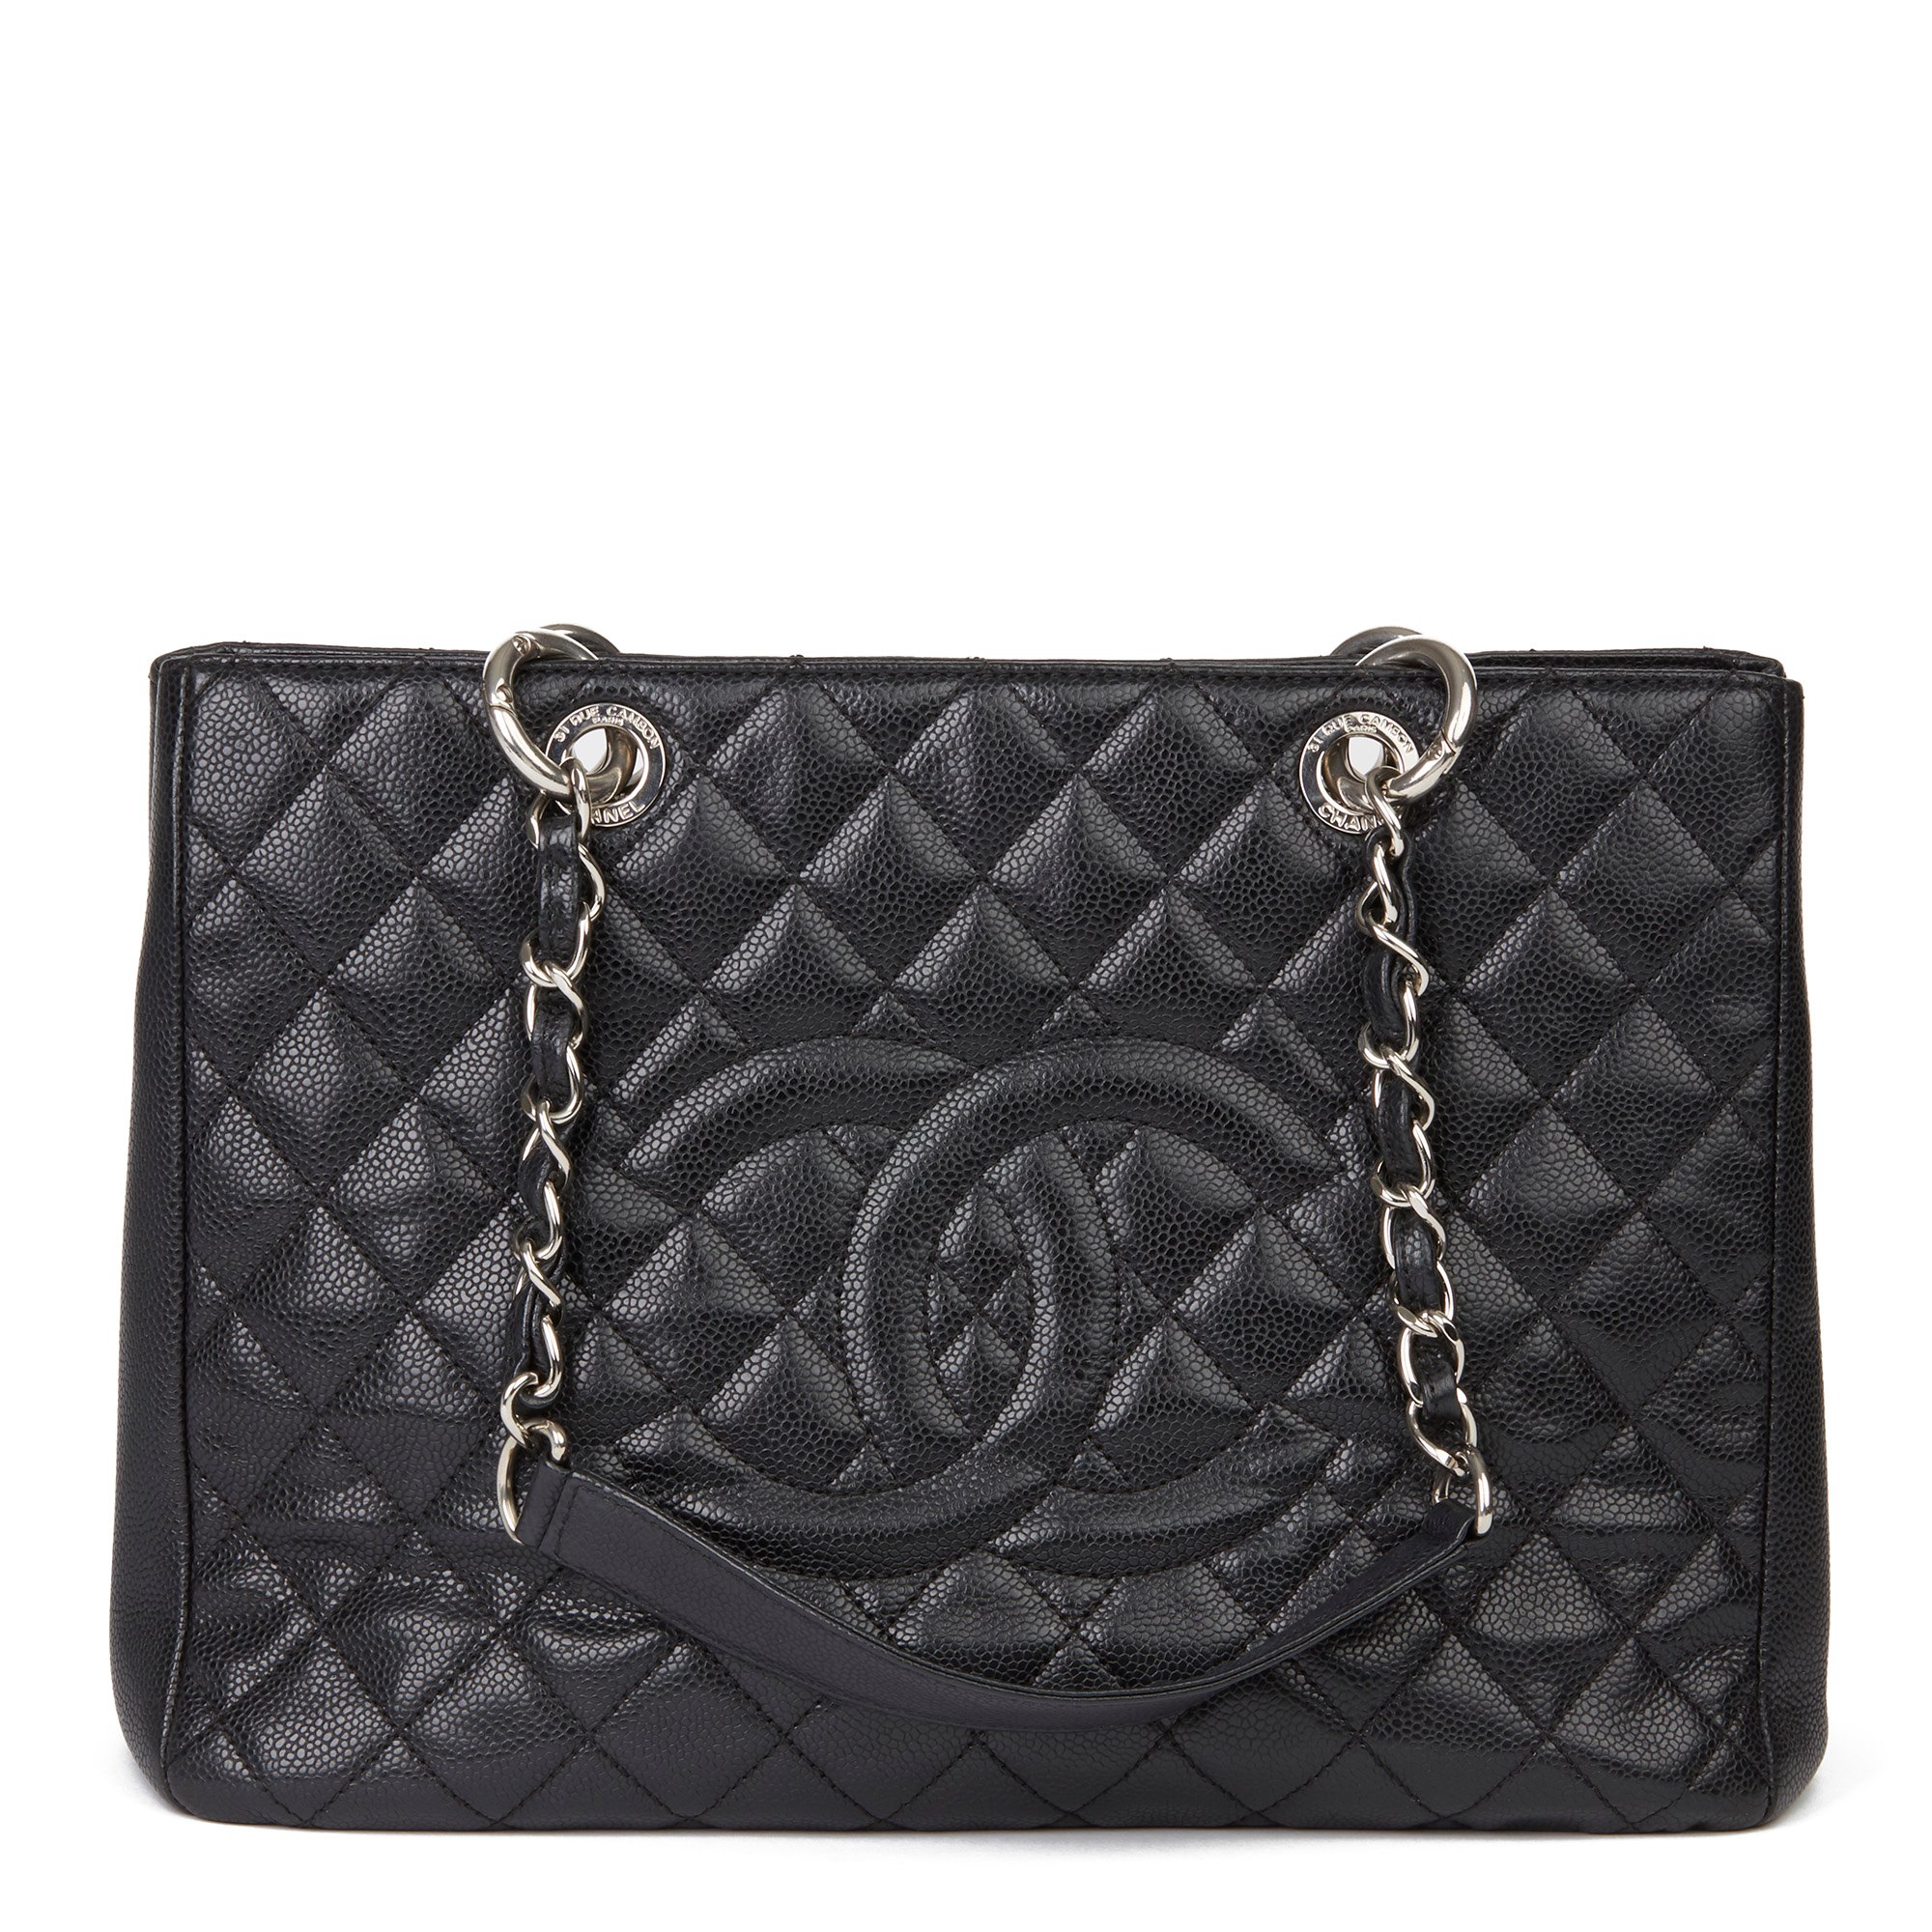 Chanel 22 Large Handbag Price Range | semashow.com